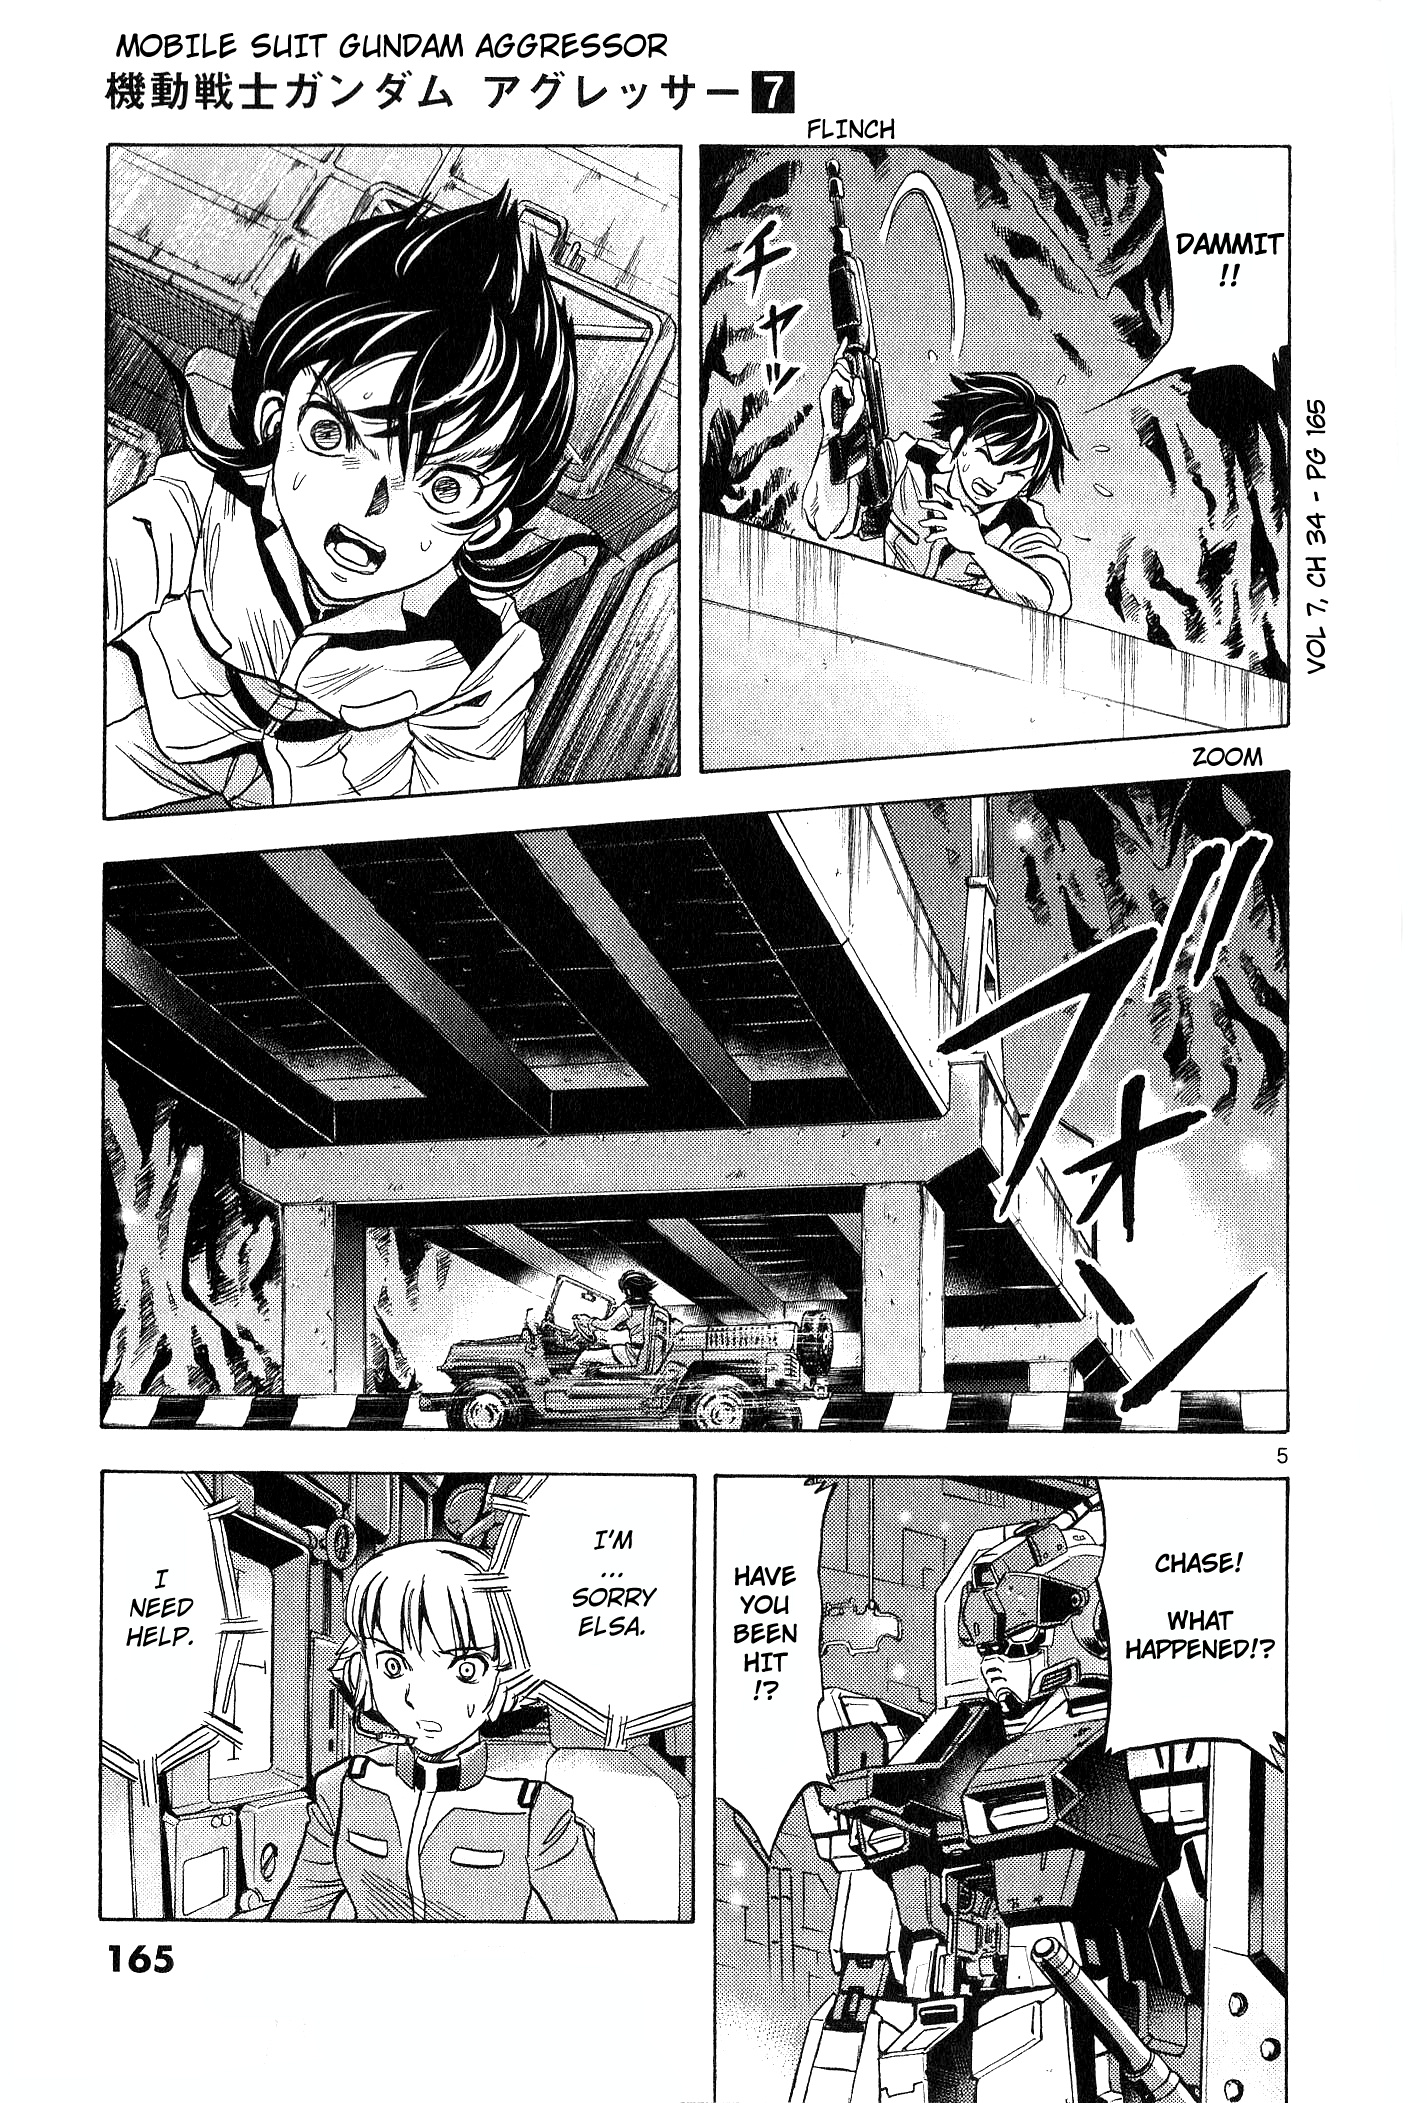 Mobile Suit Gundam Aggressor - chapter 34 - #5